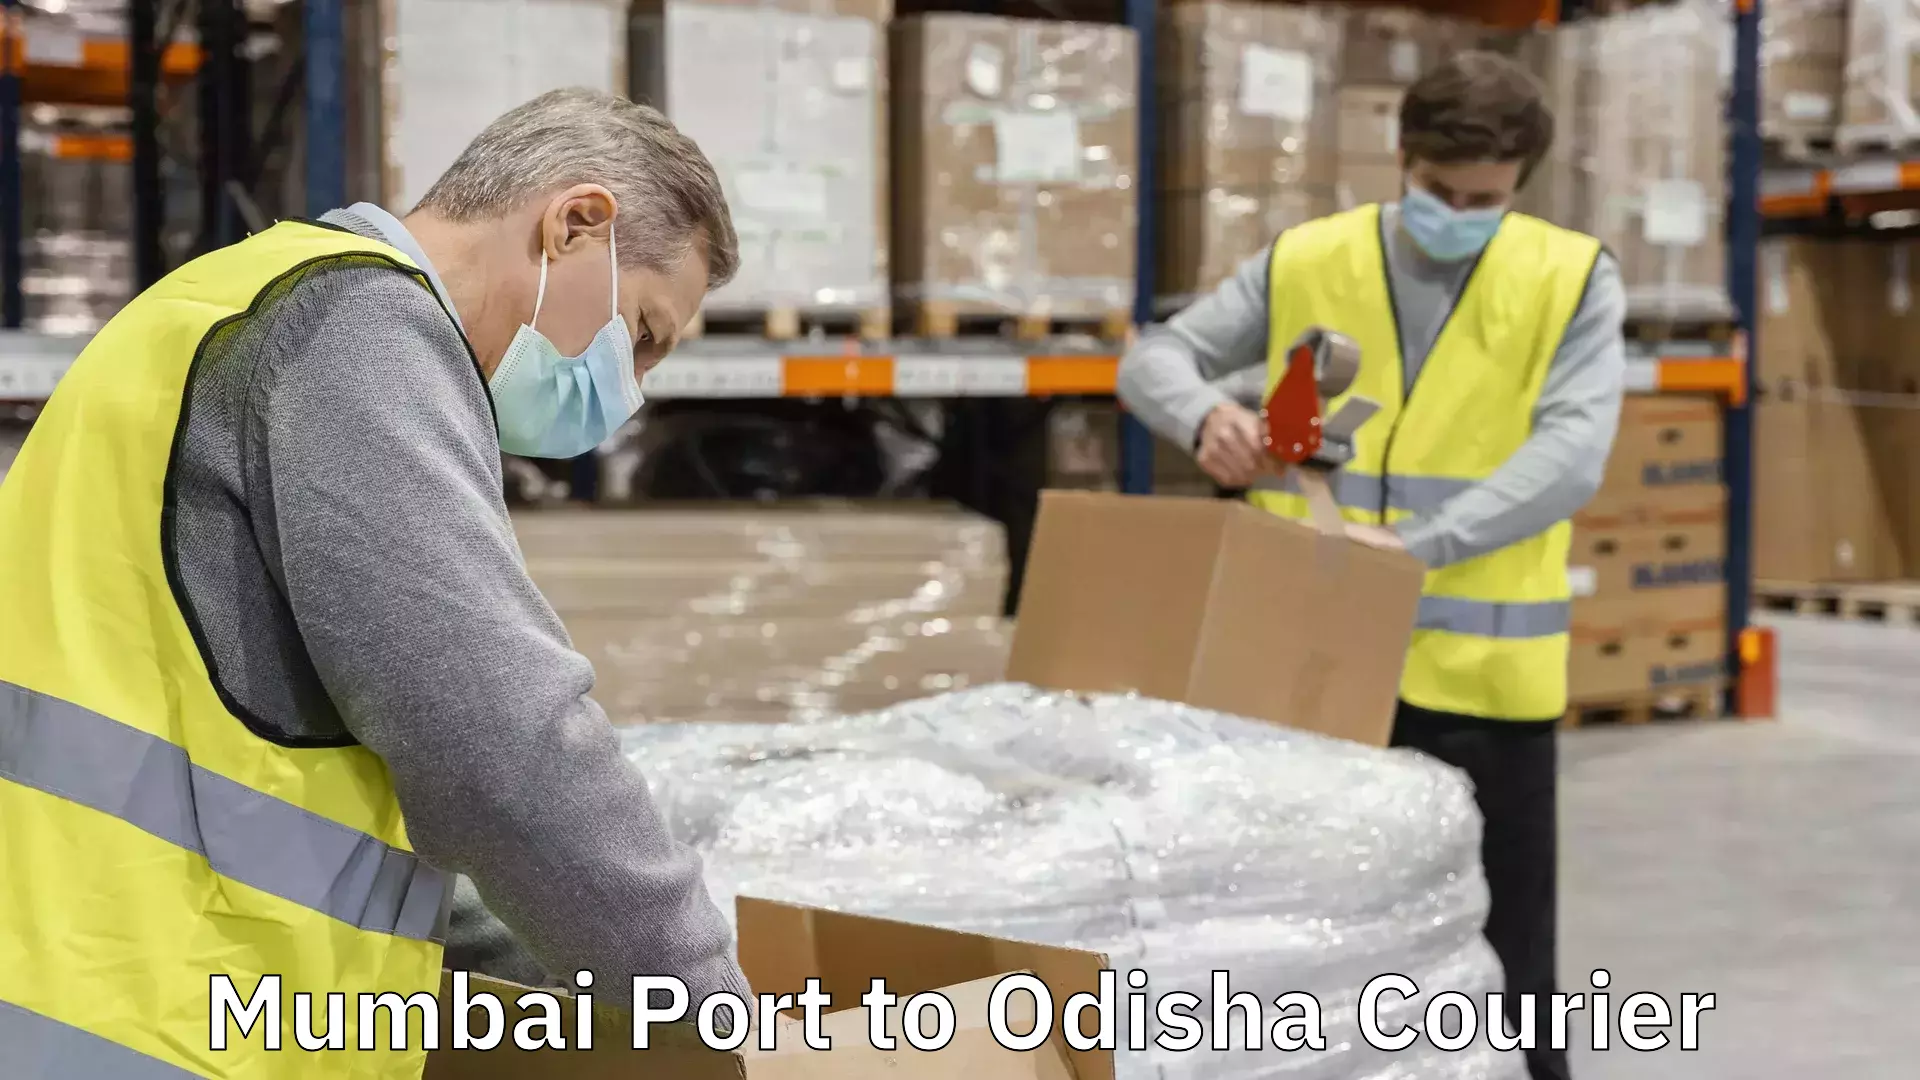 User-friendly delivery service Mumbai Port to Odisha